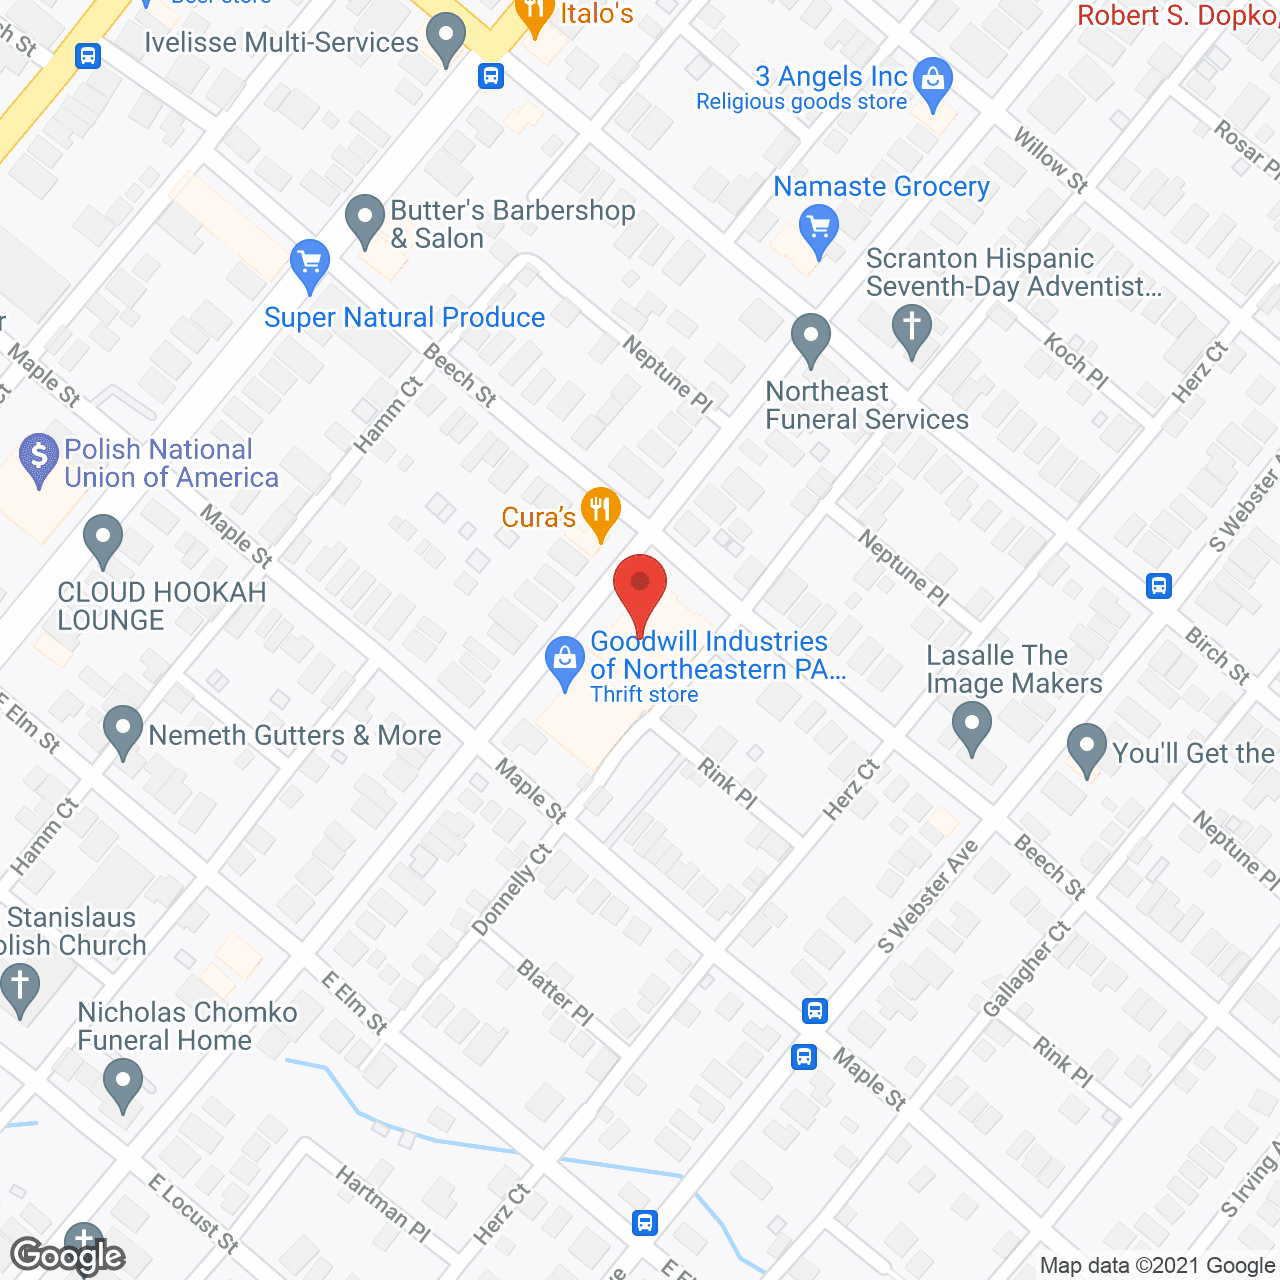 Goodwill Neighborhood Residences in google map